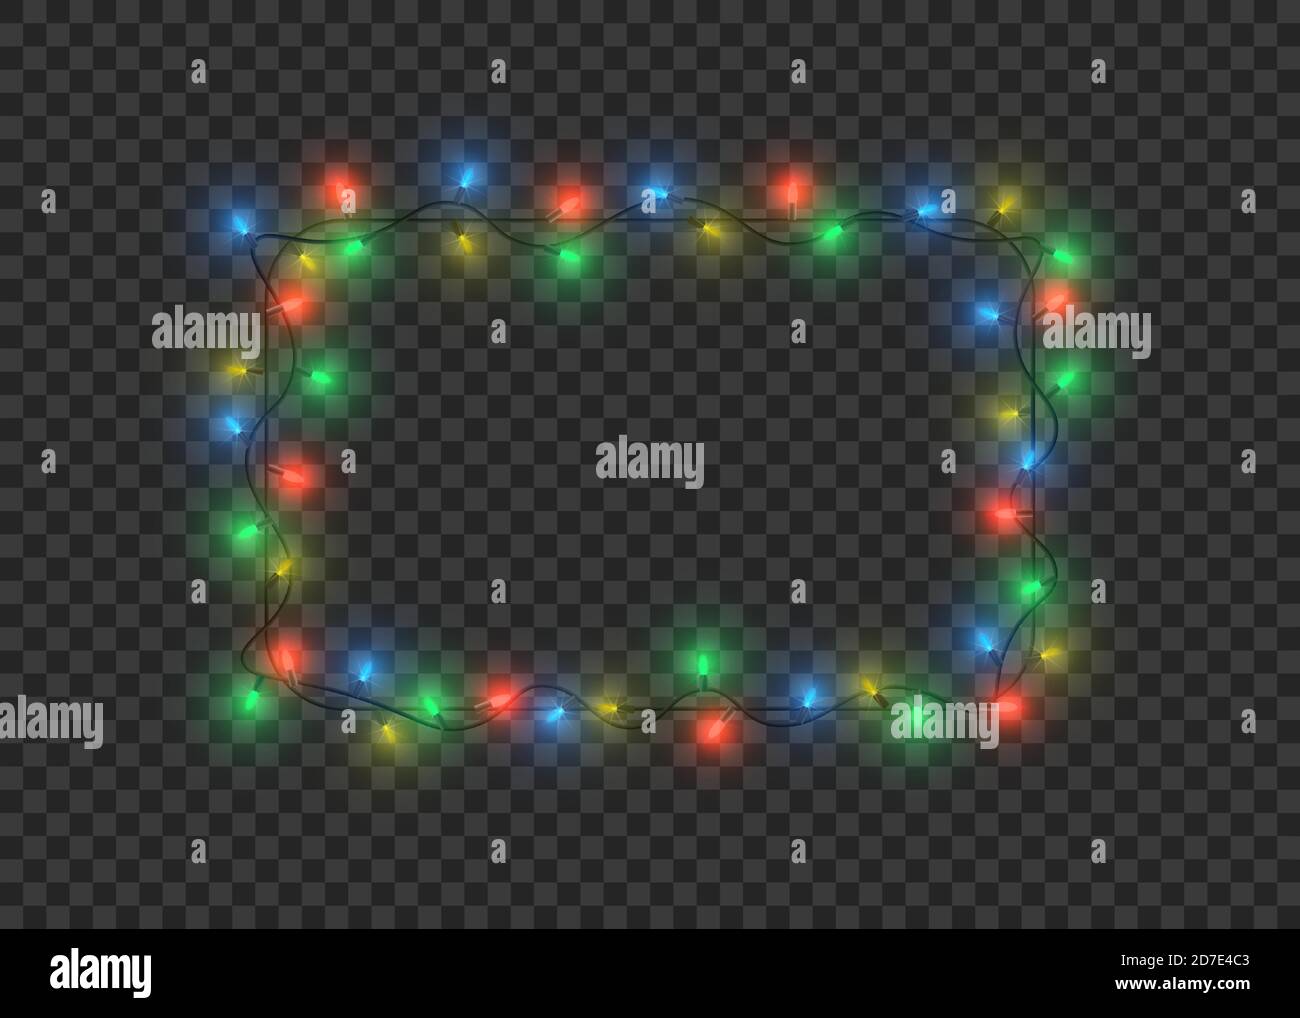 holiday lights border vector